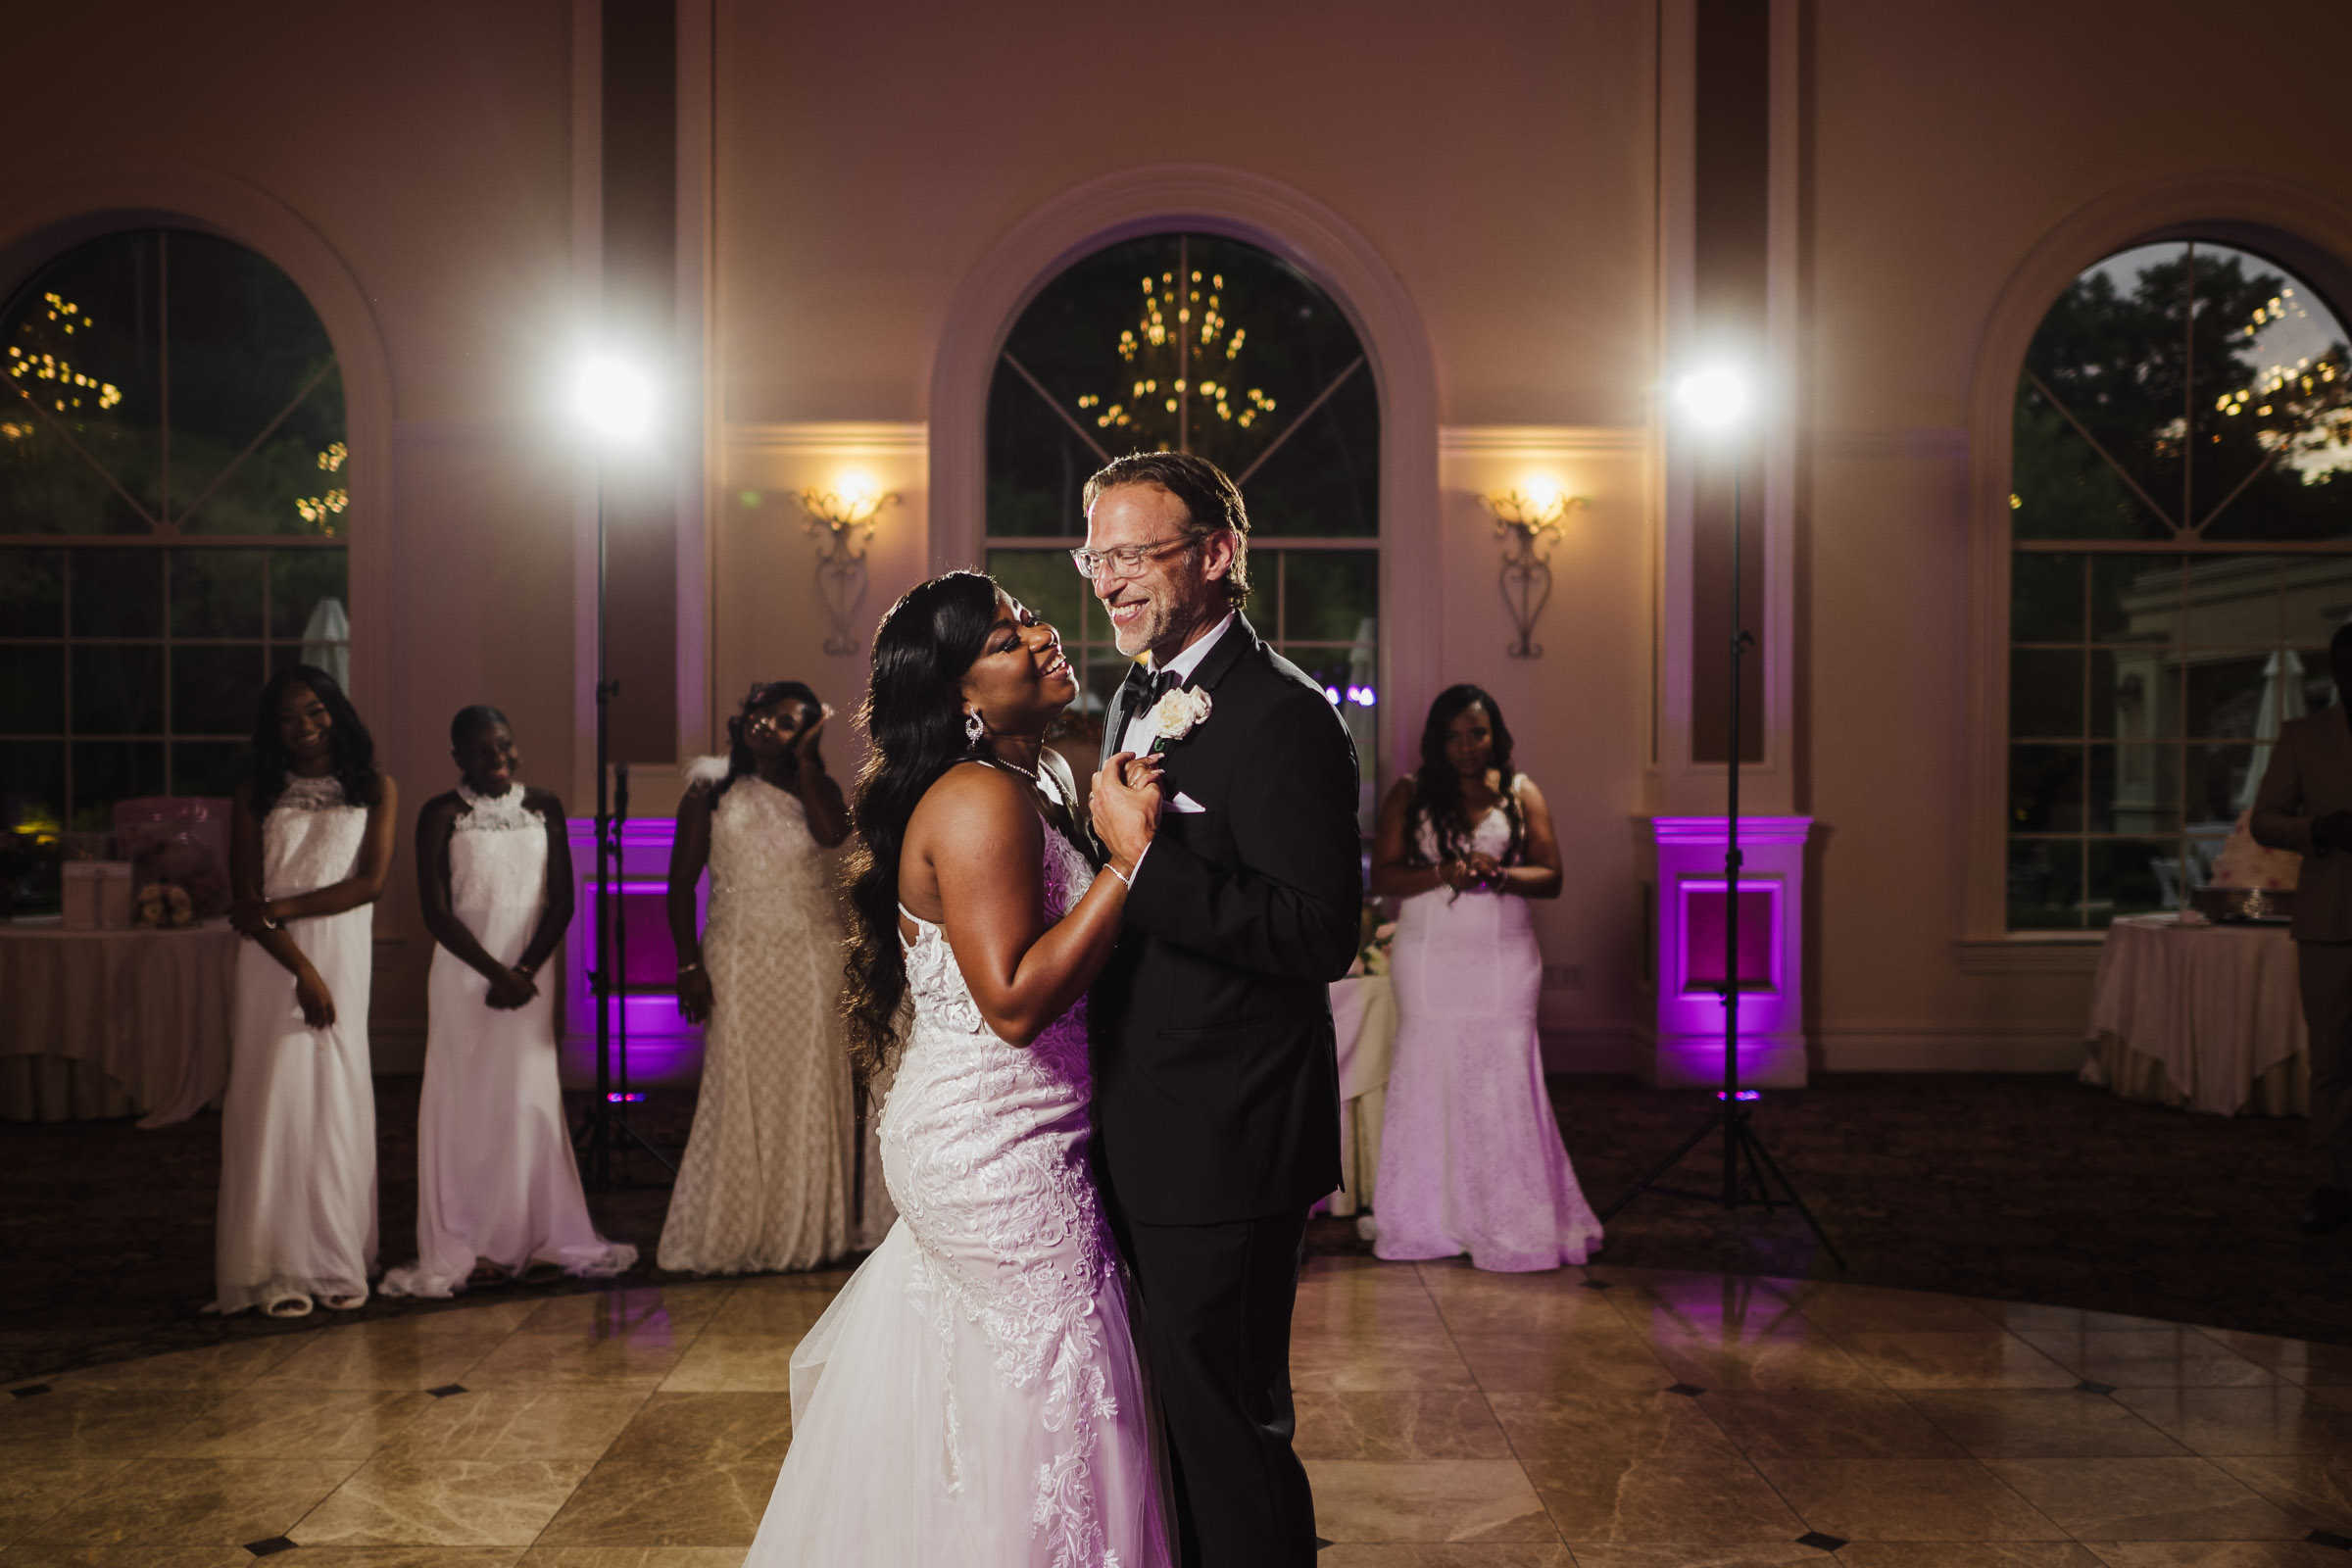 A bride and groom dance inside a ballroom during their Aria wedding night.